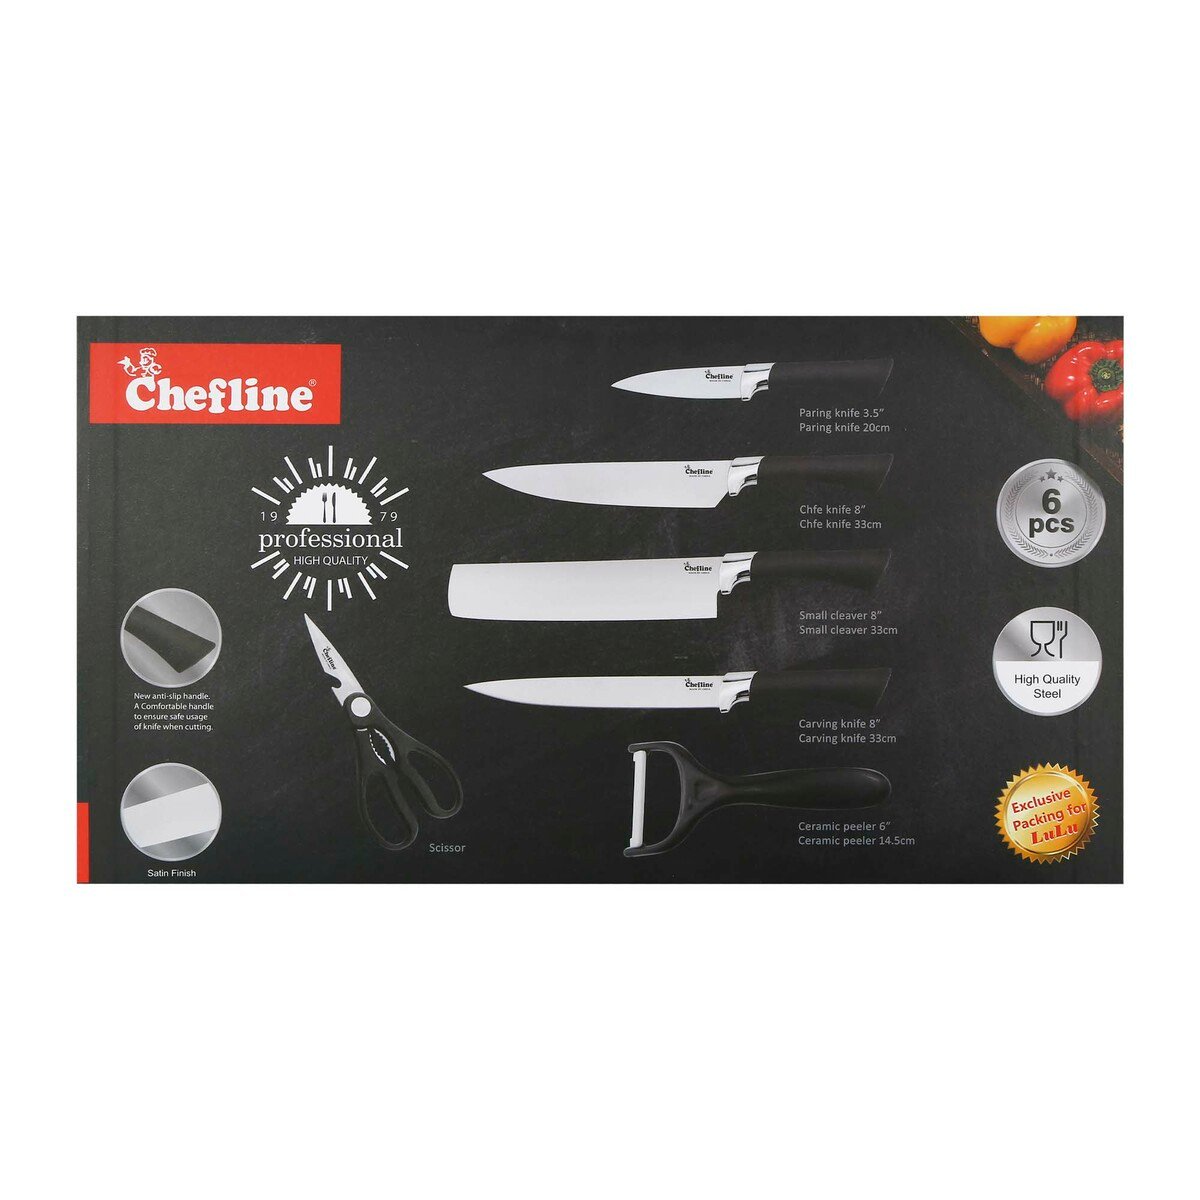 Chefline Knives GS-06105 6S 6pcs